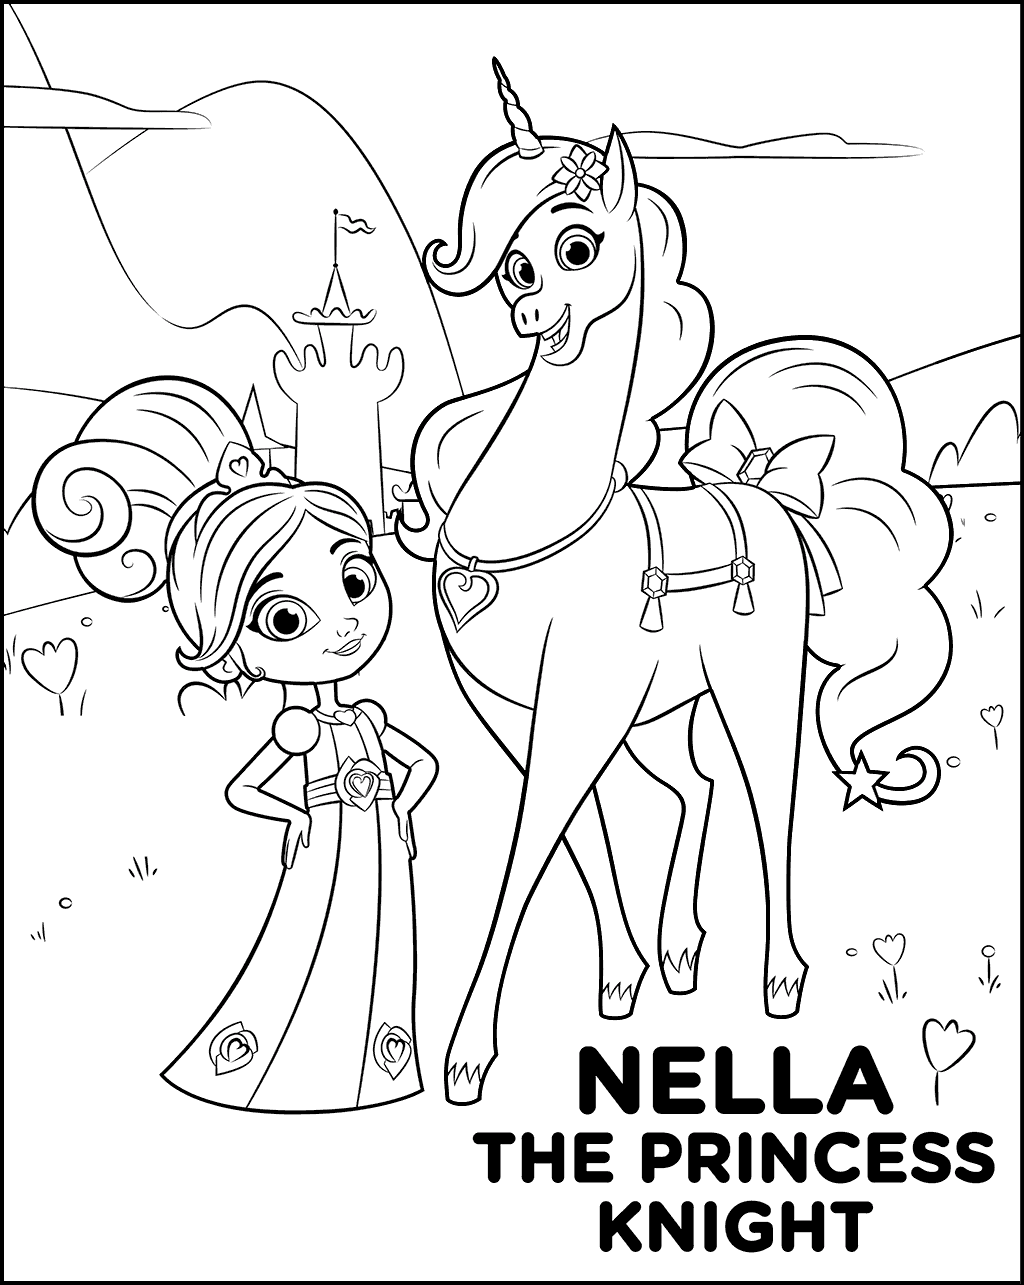 Nella the Princess Knight Coloring Sheet